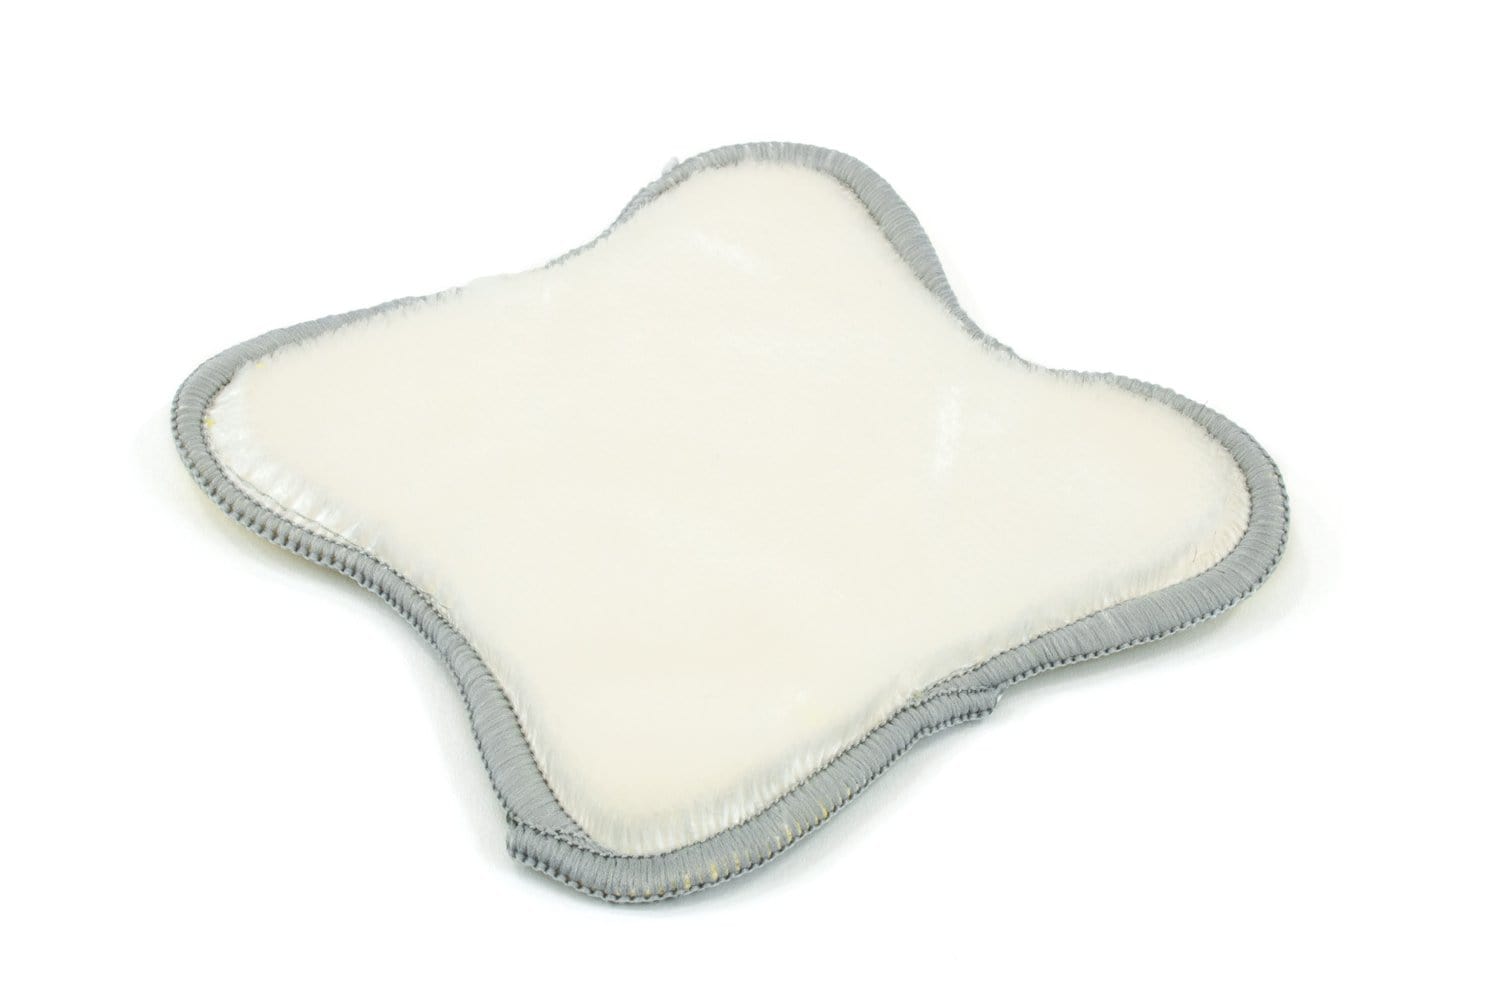 Autofiber® SCRUB NINJA, interior scrubbing sponge, 3 pack